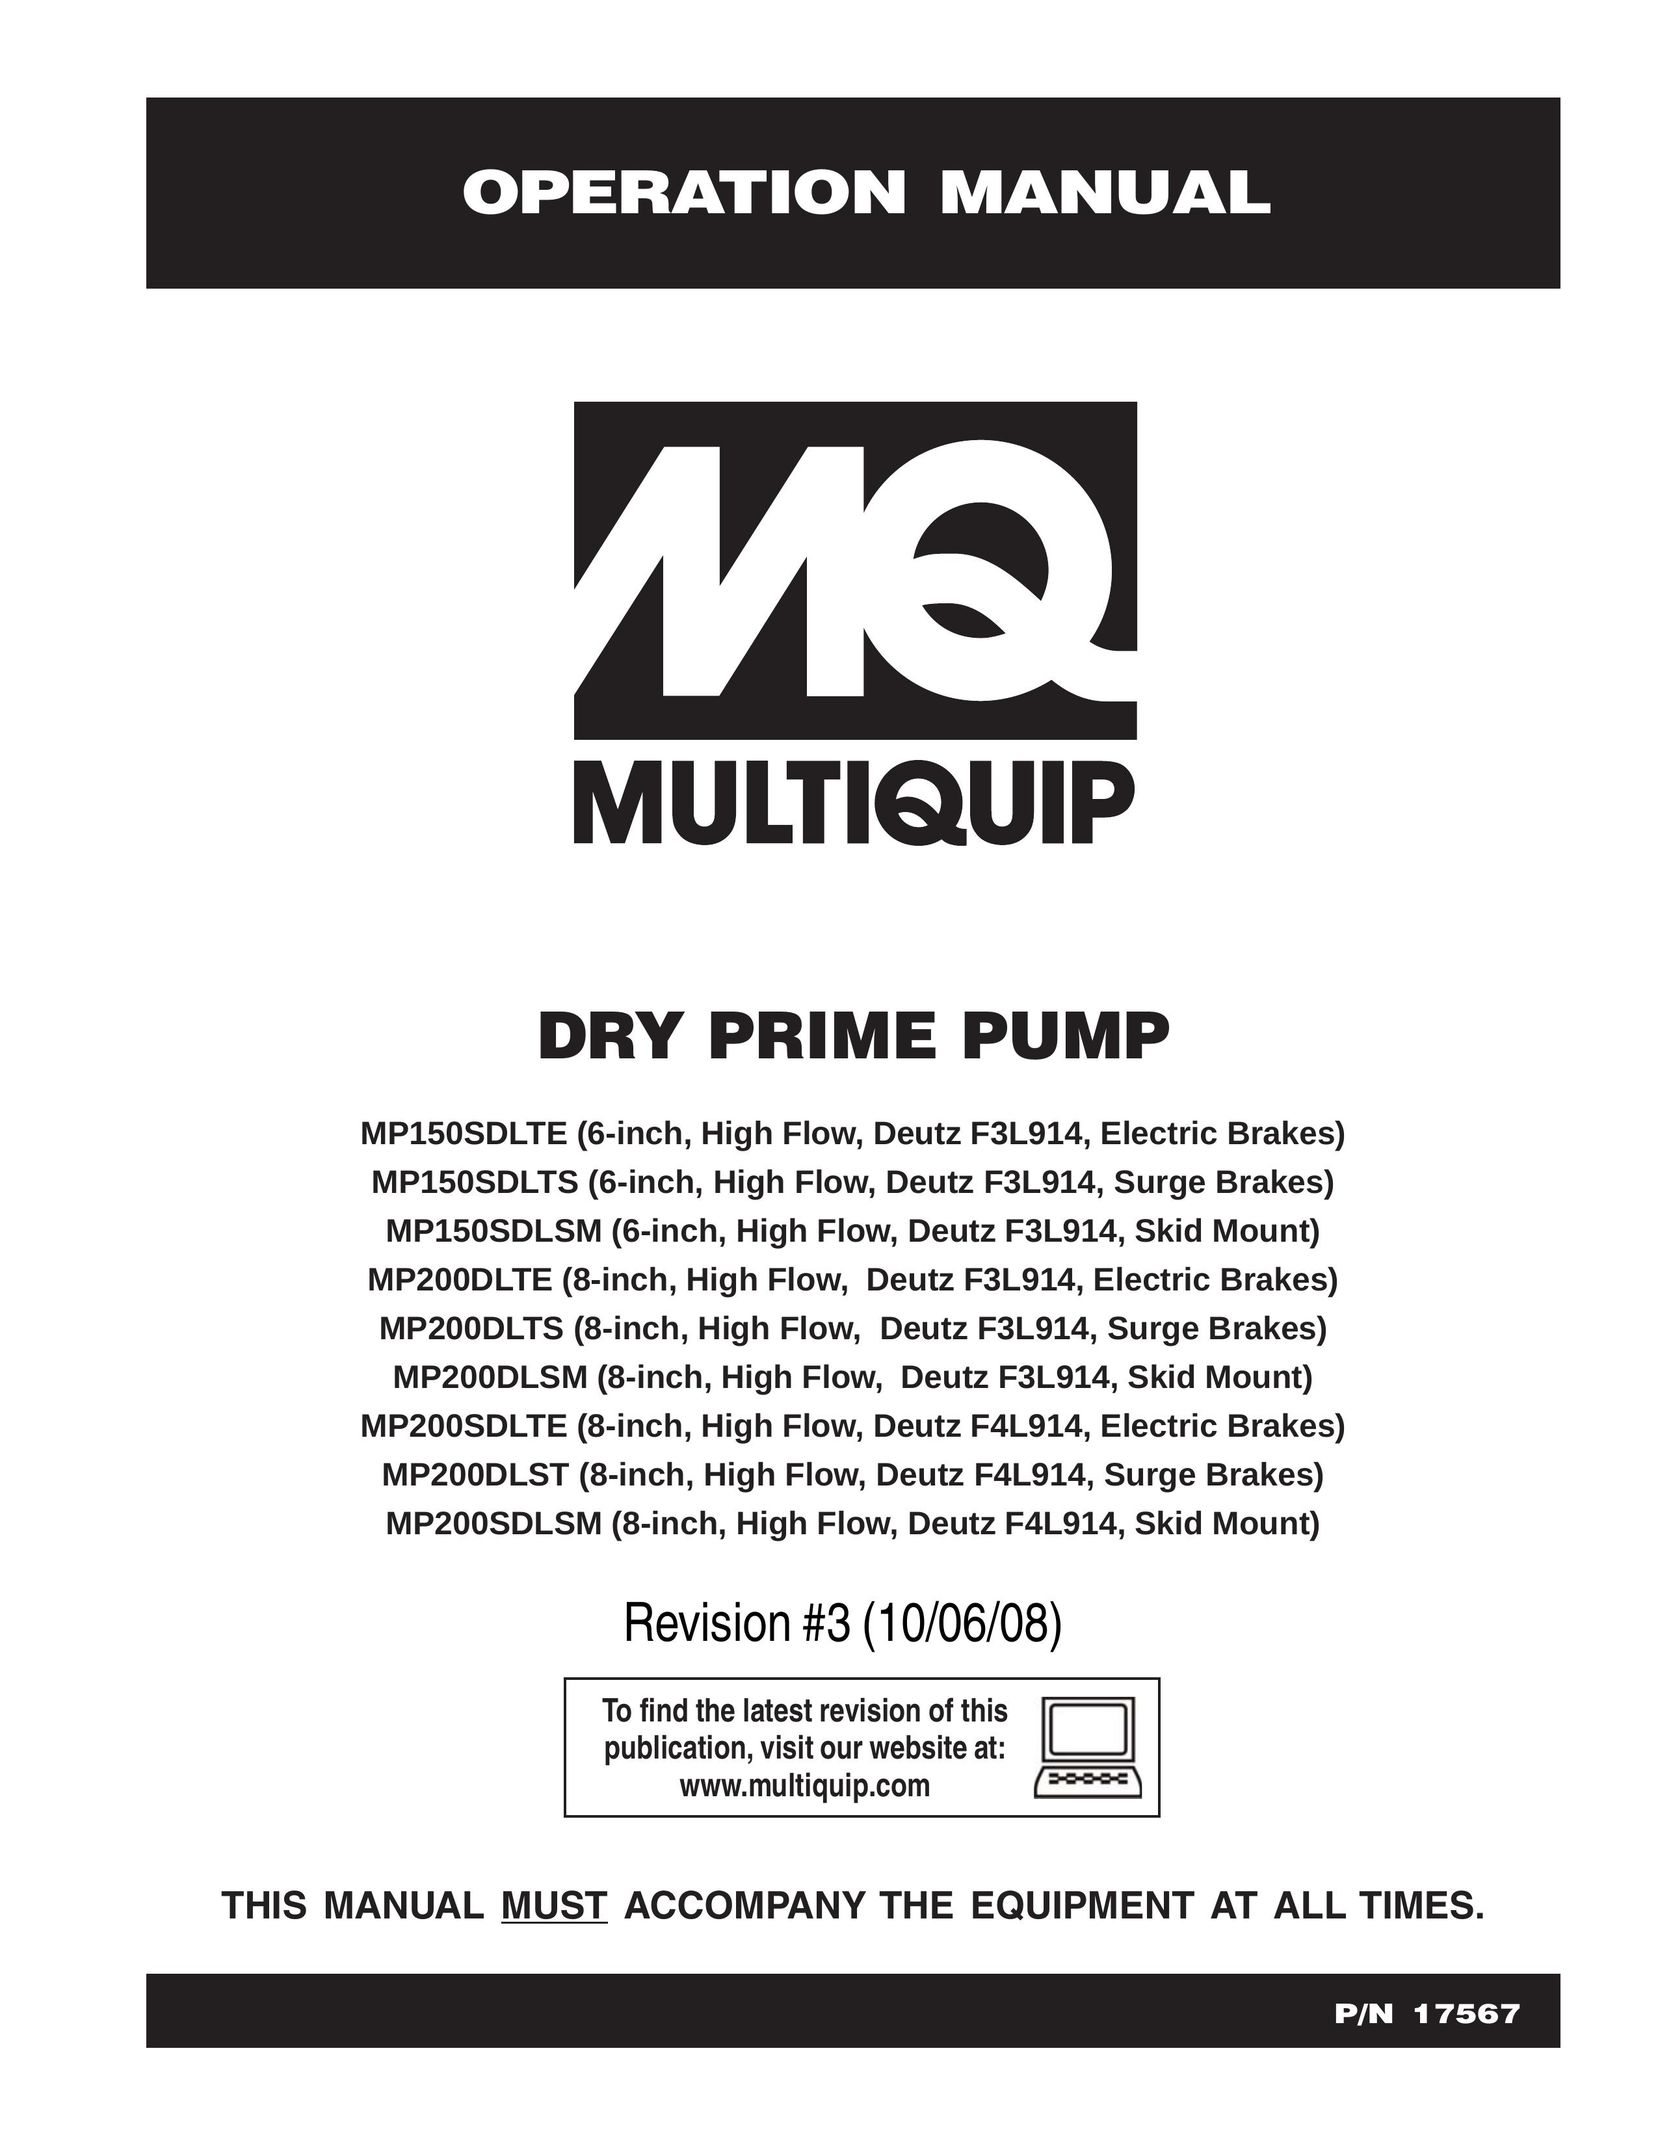 Multiquip MP200DLSM Heat Pump User Manual